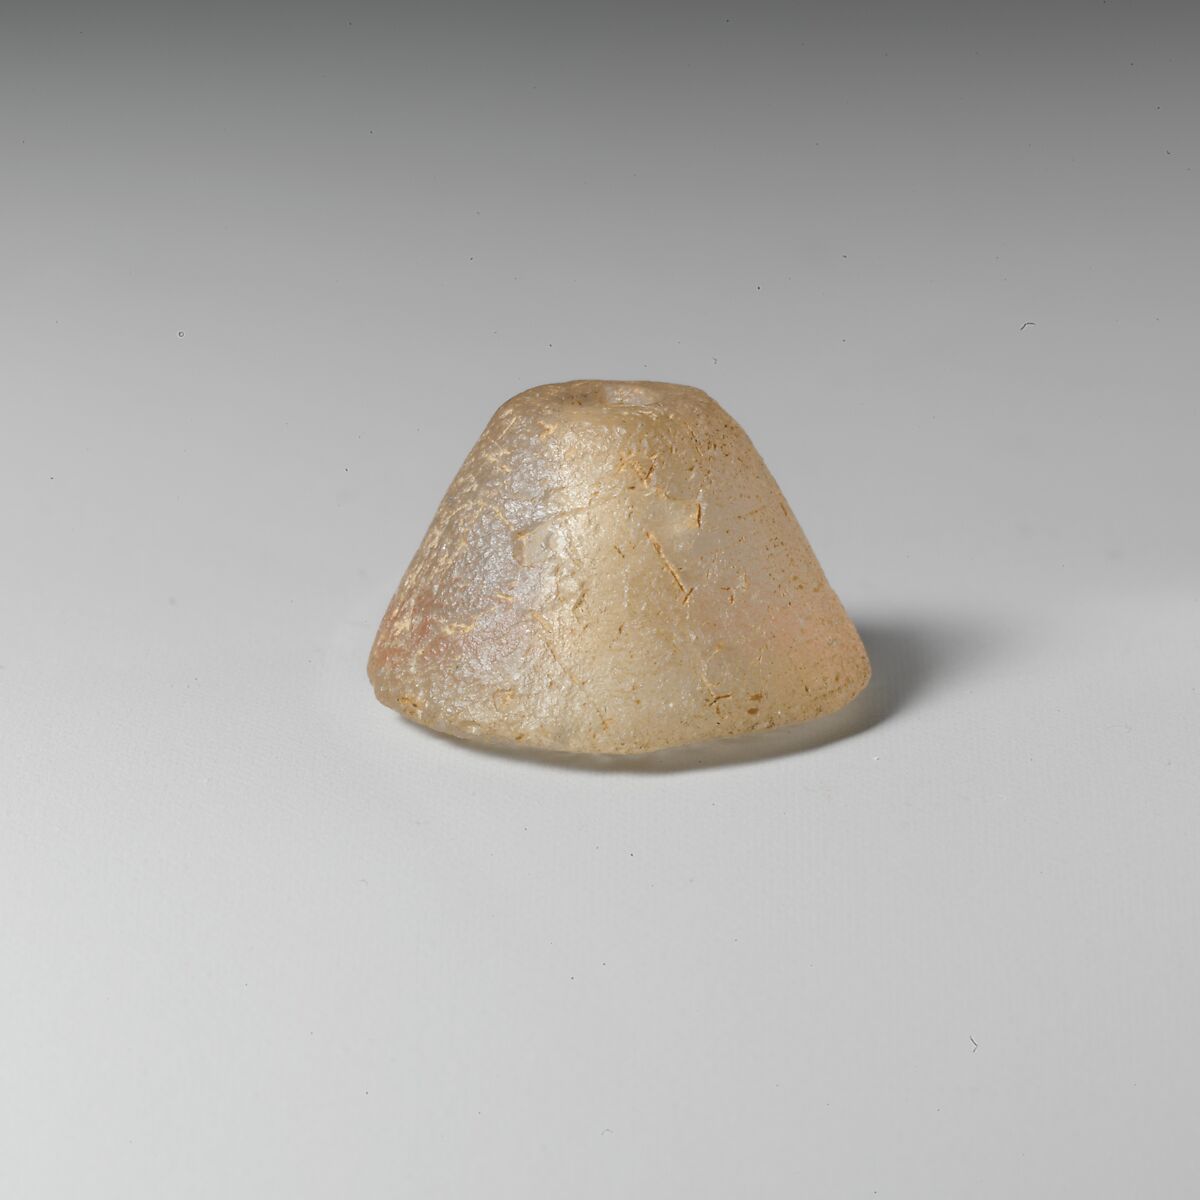 Rock crystal spindle whorl, Rock crystal, Minoan 